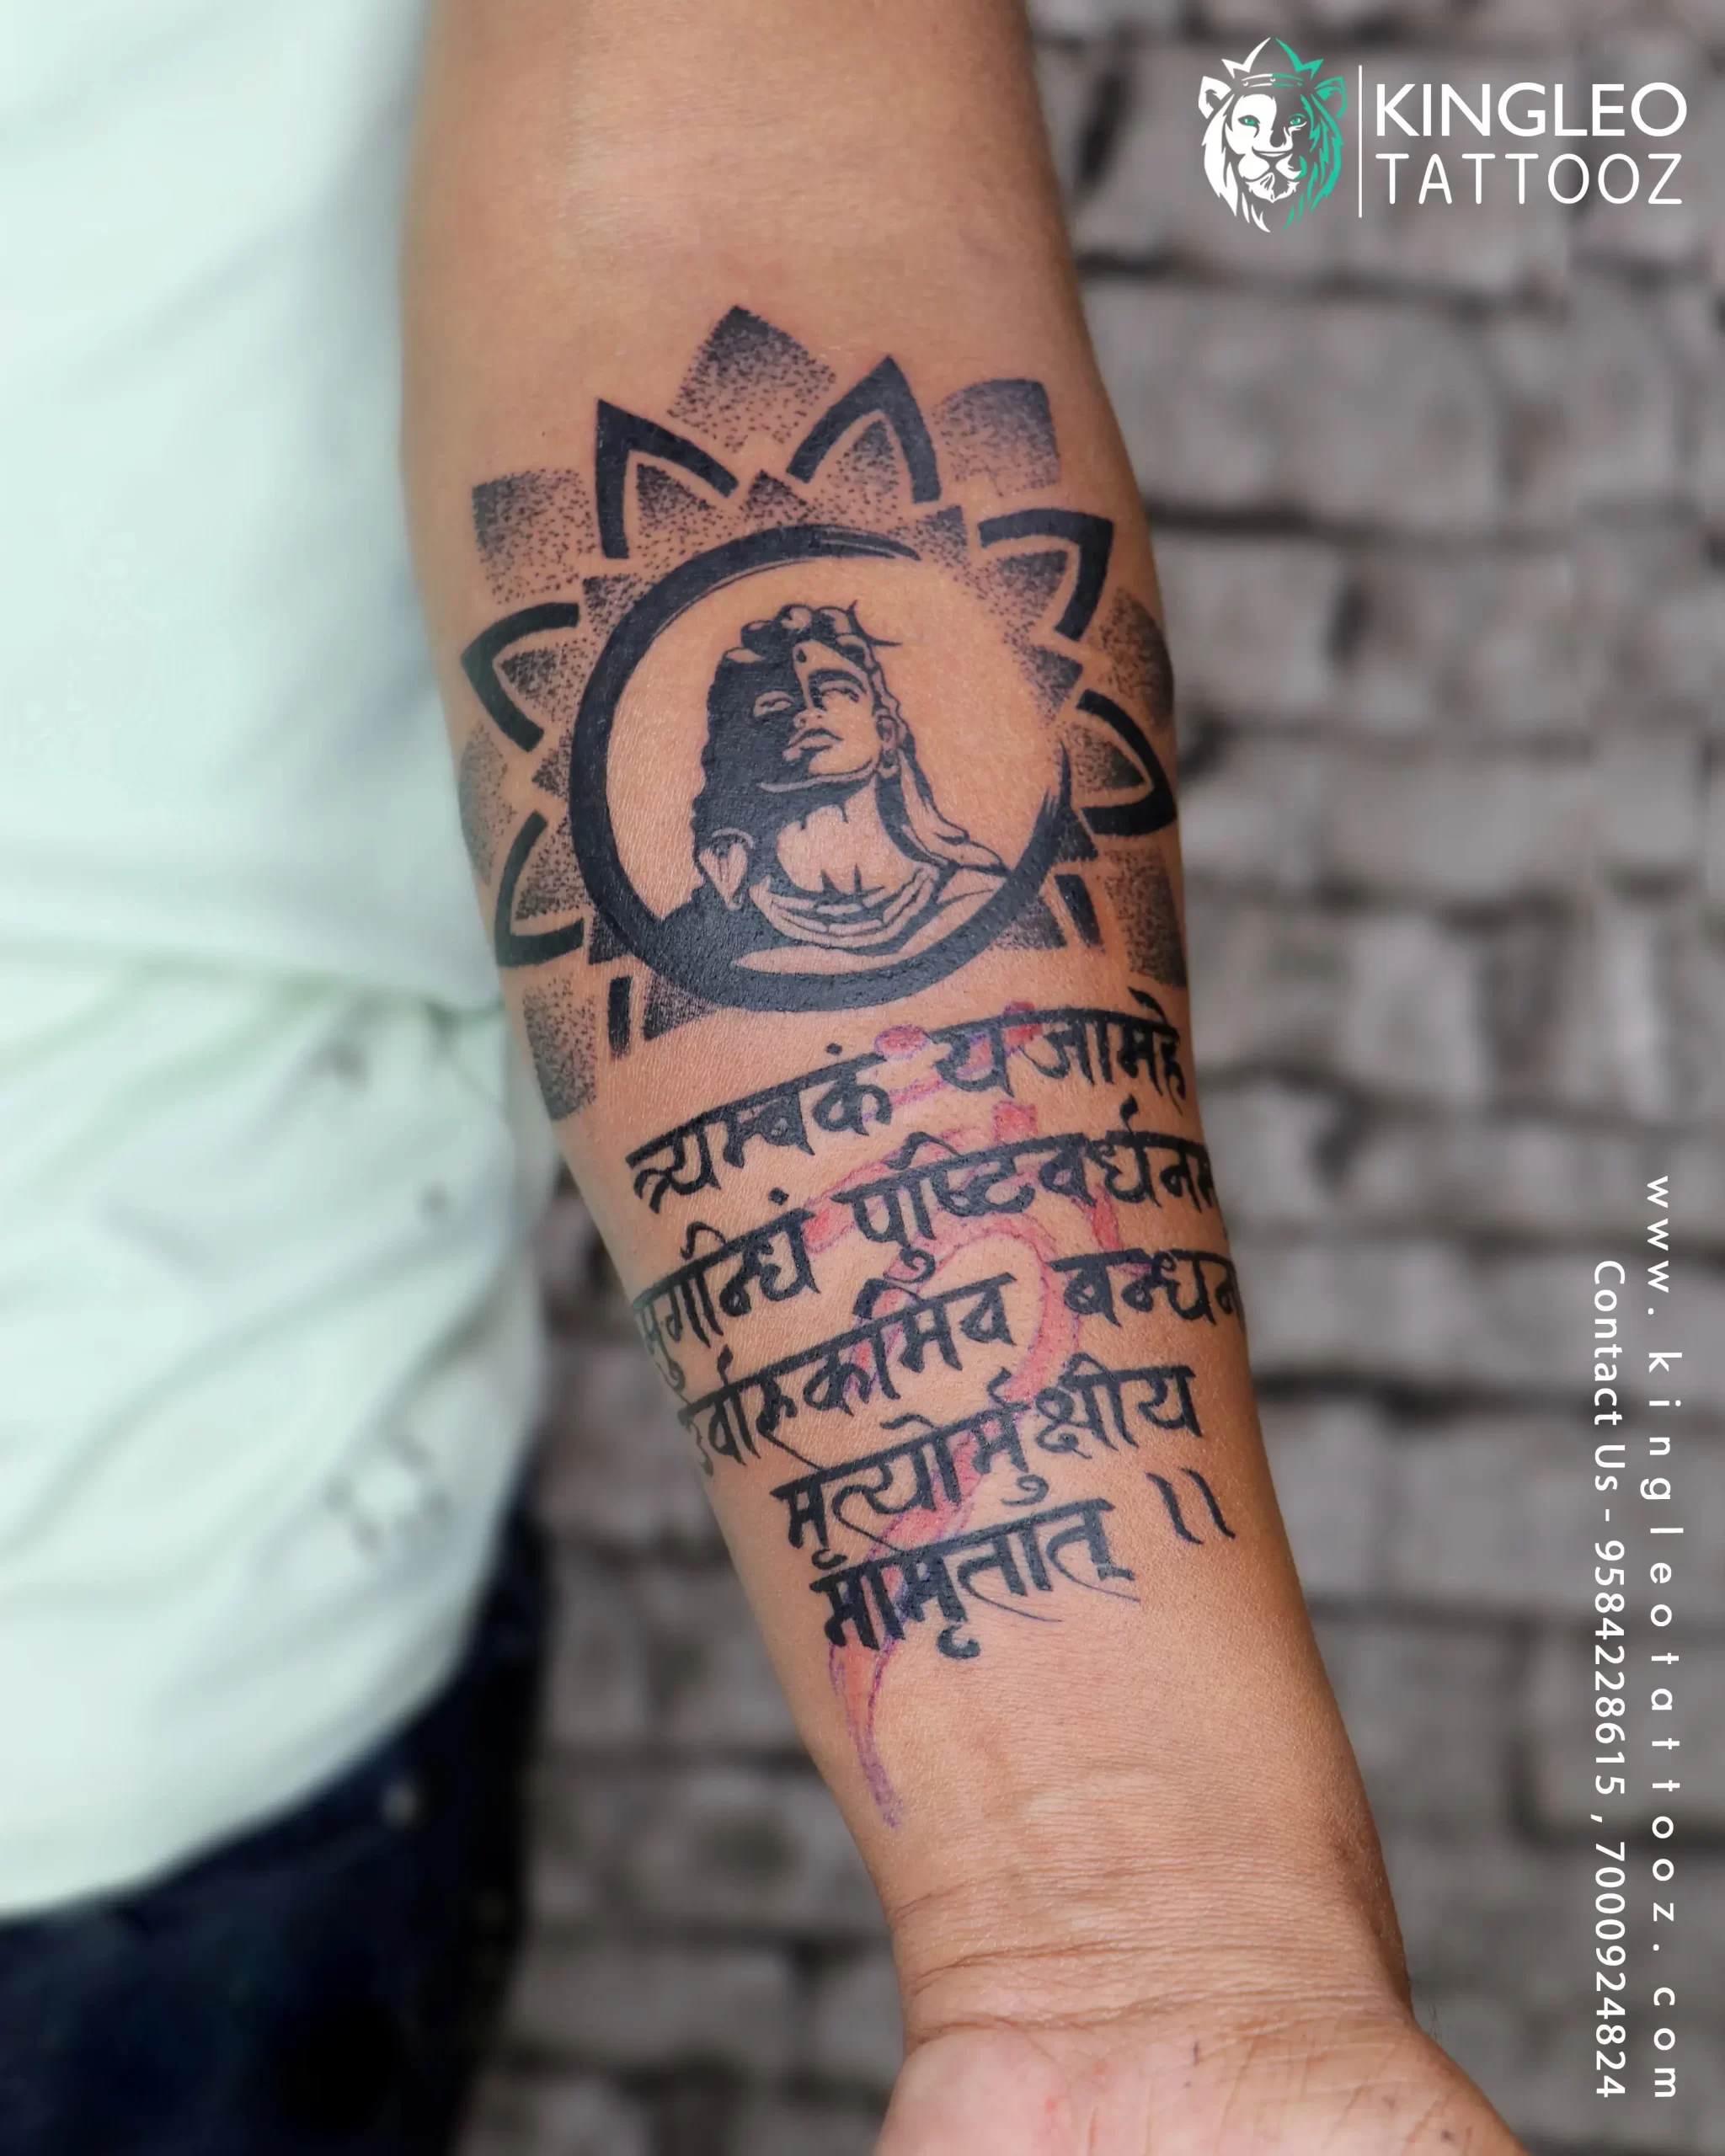 Lord Shiva with Maha Mrityunjaya Mantra Tattoo - Ace Tattooz